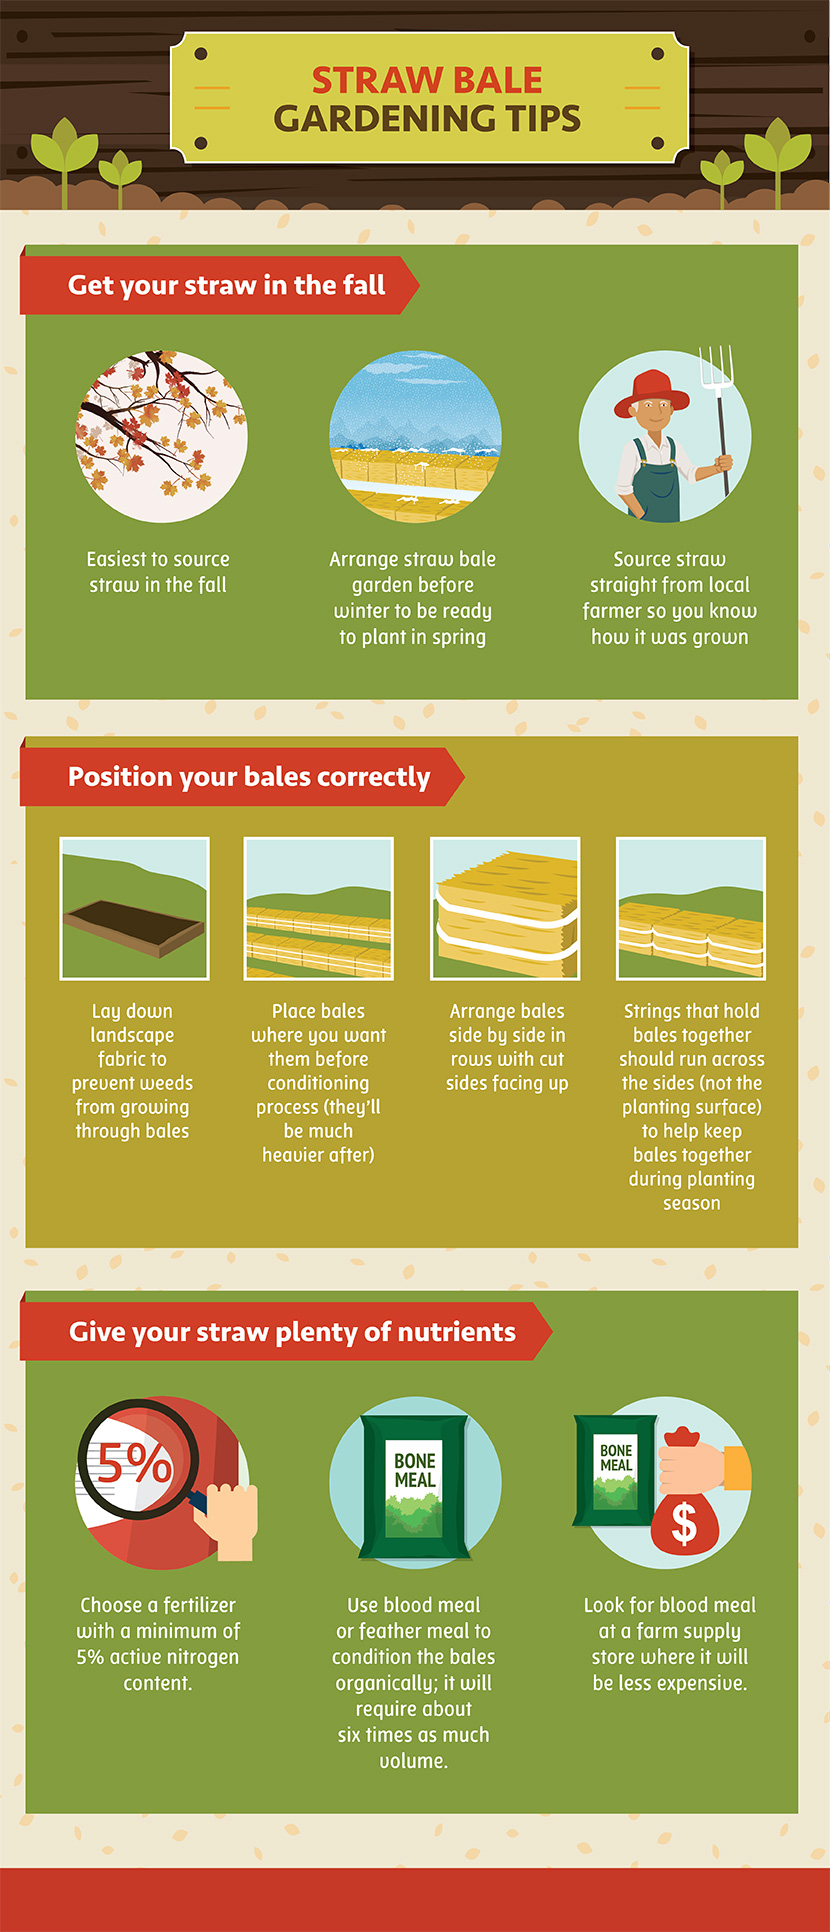 Straw Bale Gardening: Tips